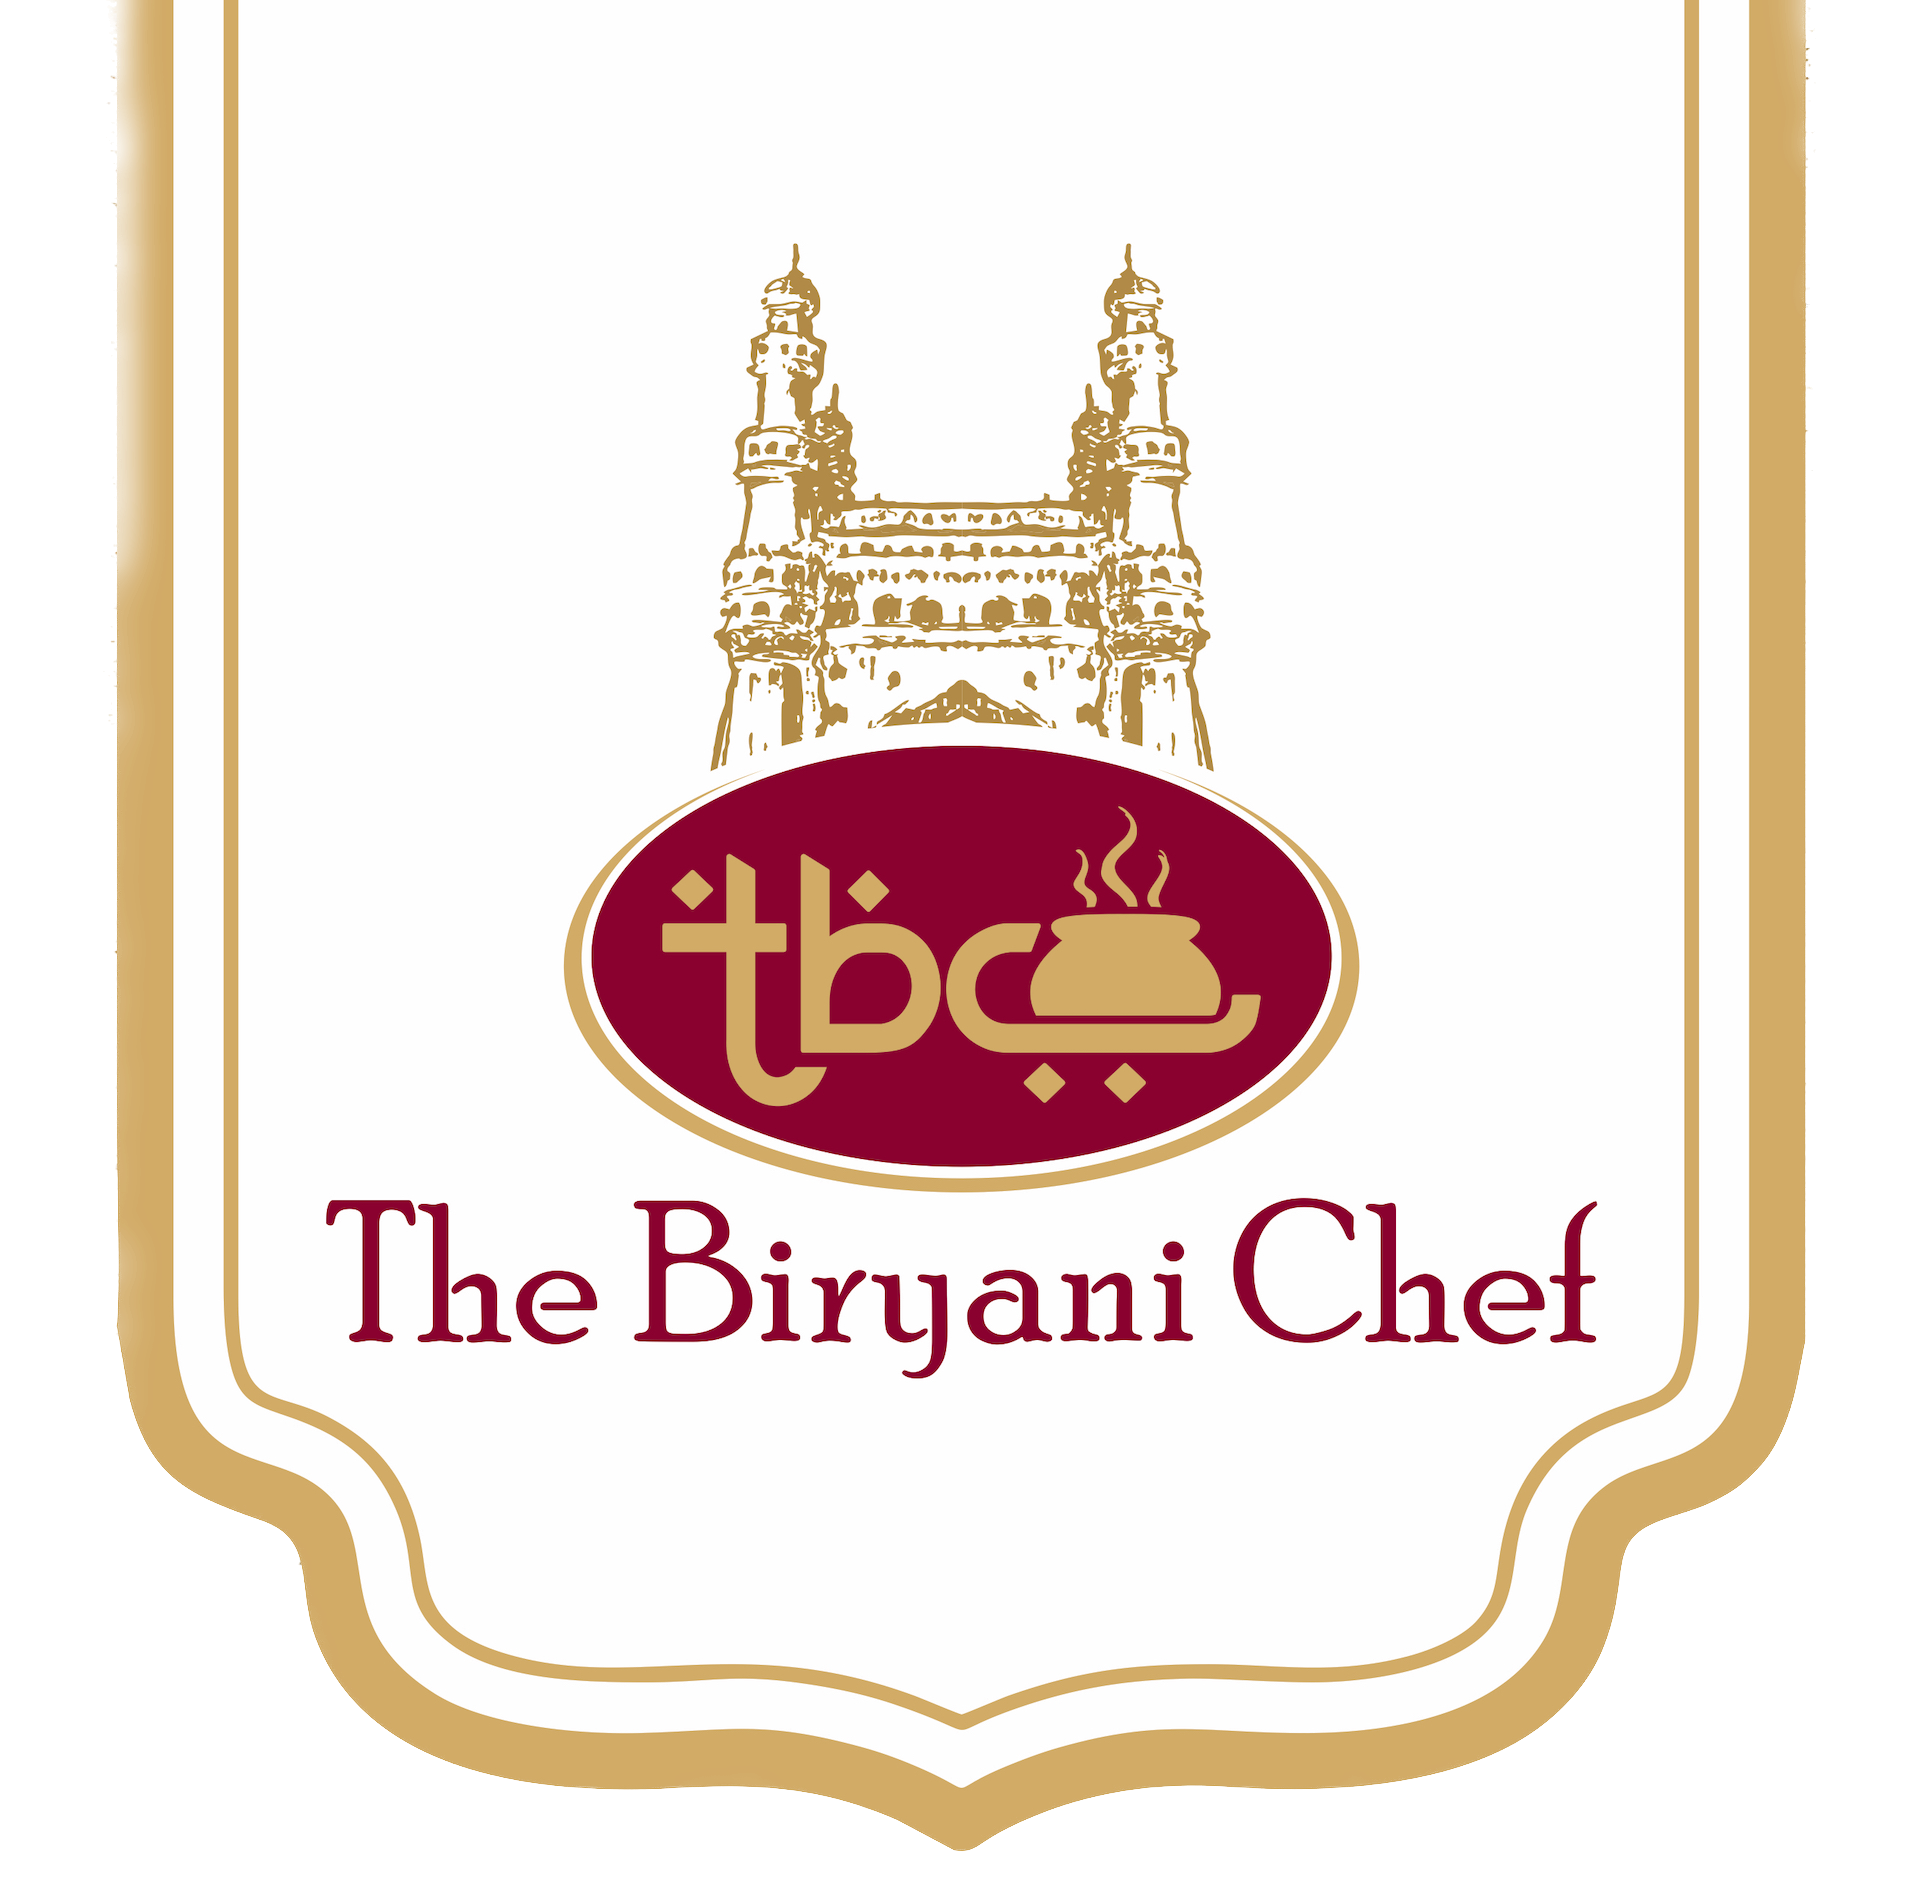 Biriyani Biryani Projects :: Photos, videos, logos, illustrations and  branding :: Behance